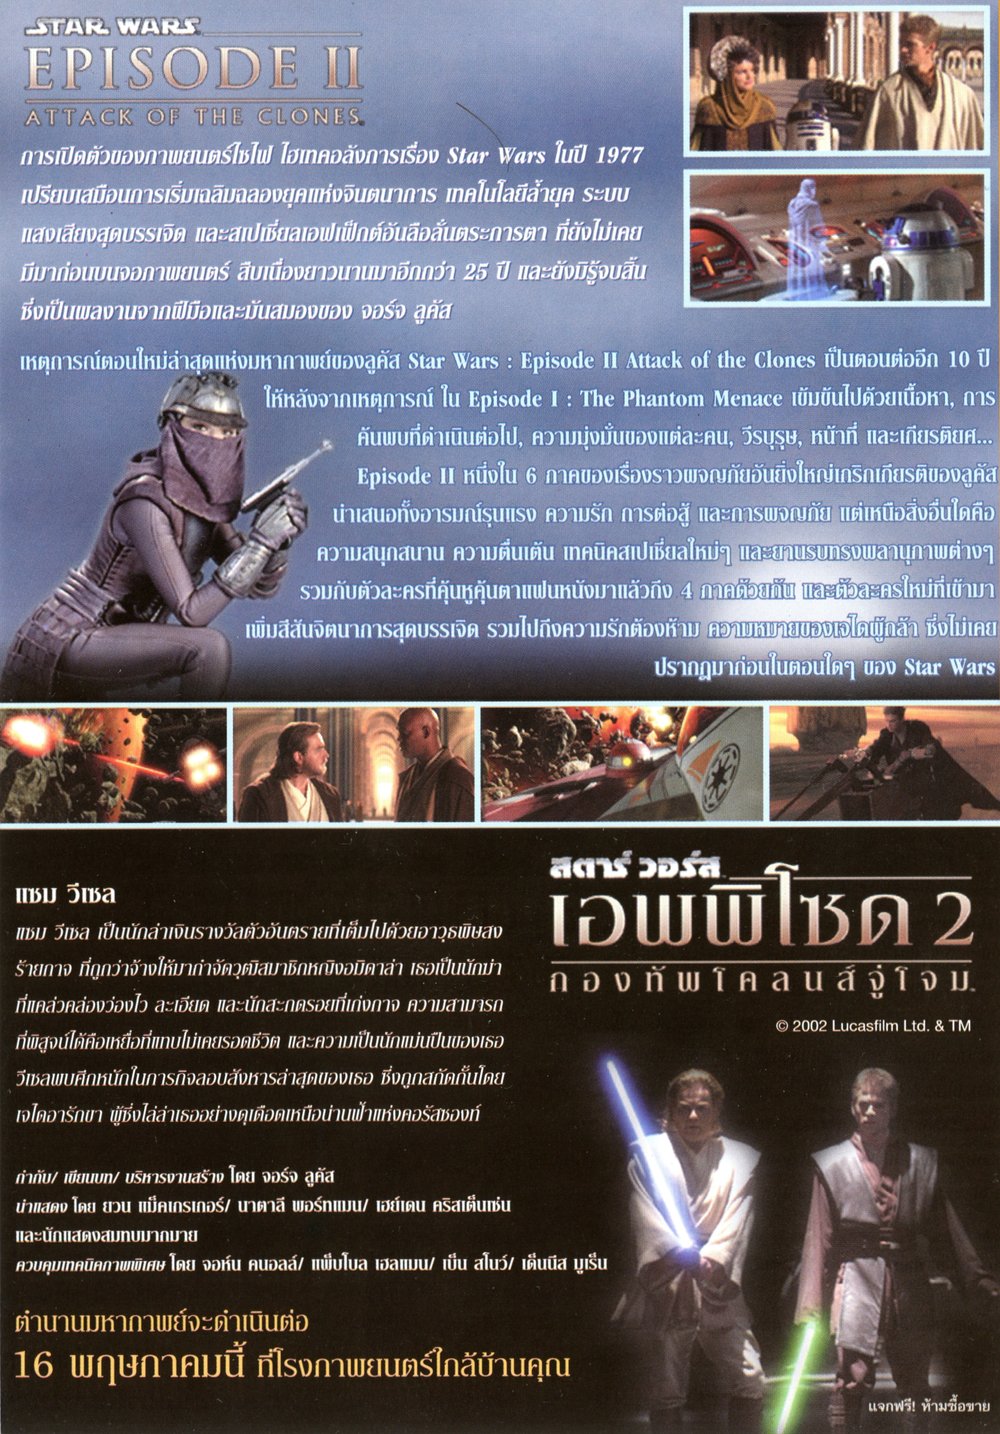 AOTC Thailand Handbill - Zam Wesell 2.jpg